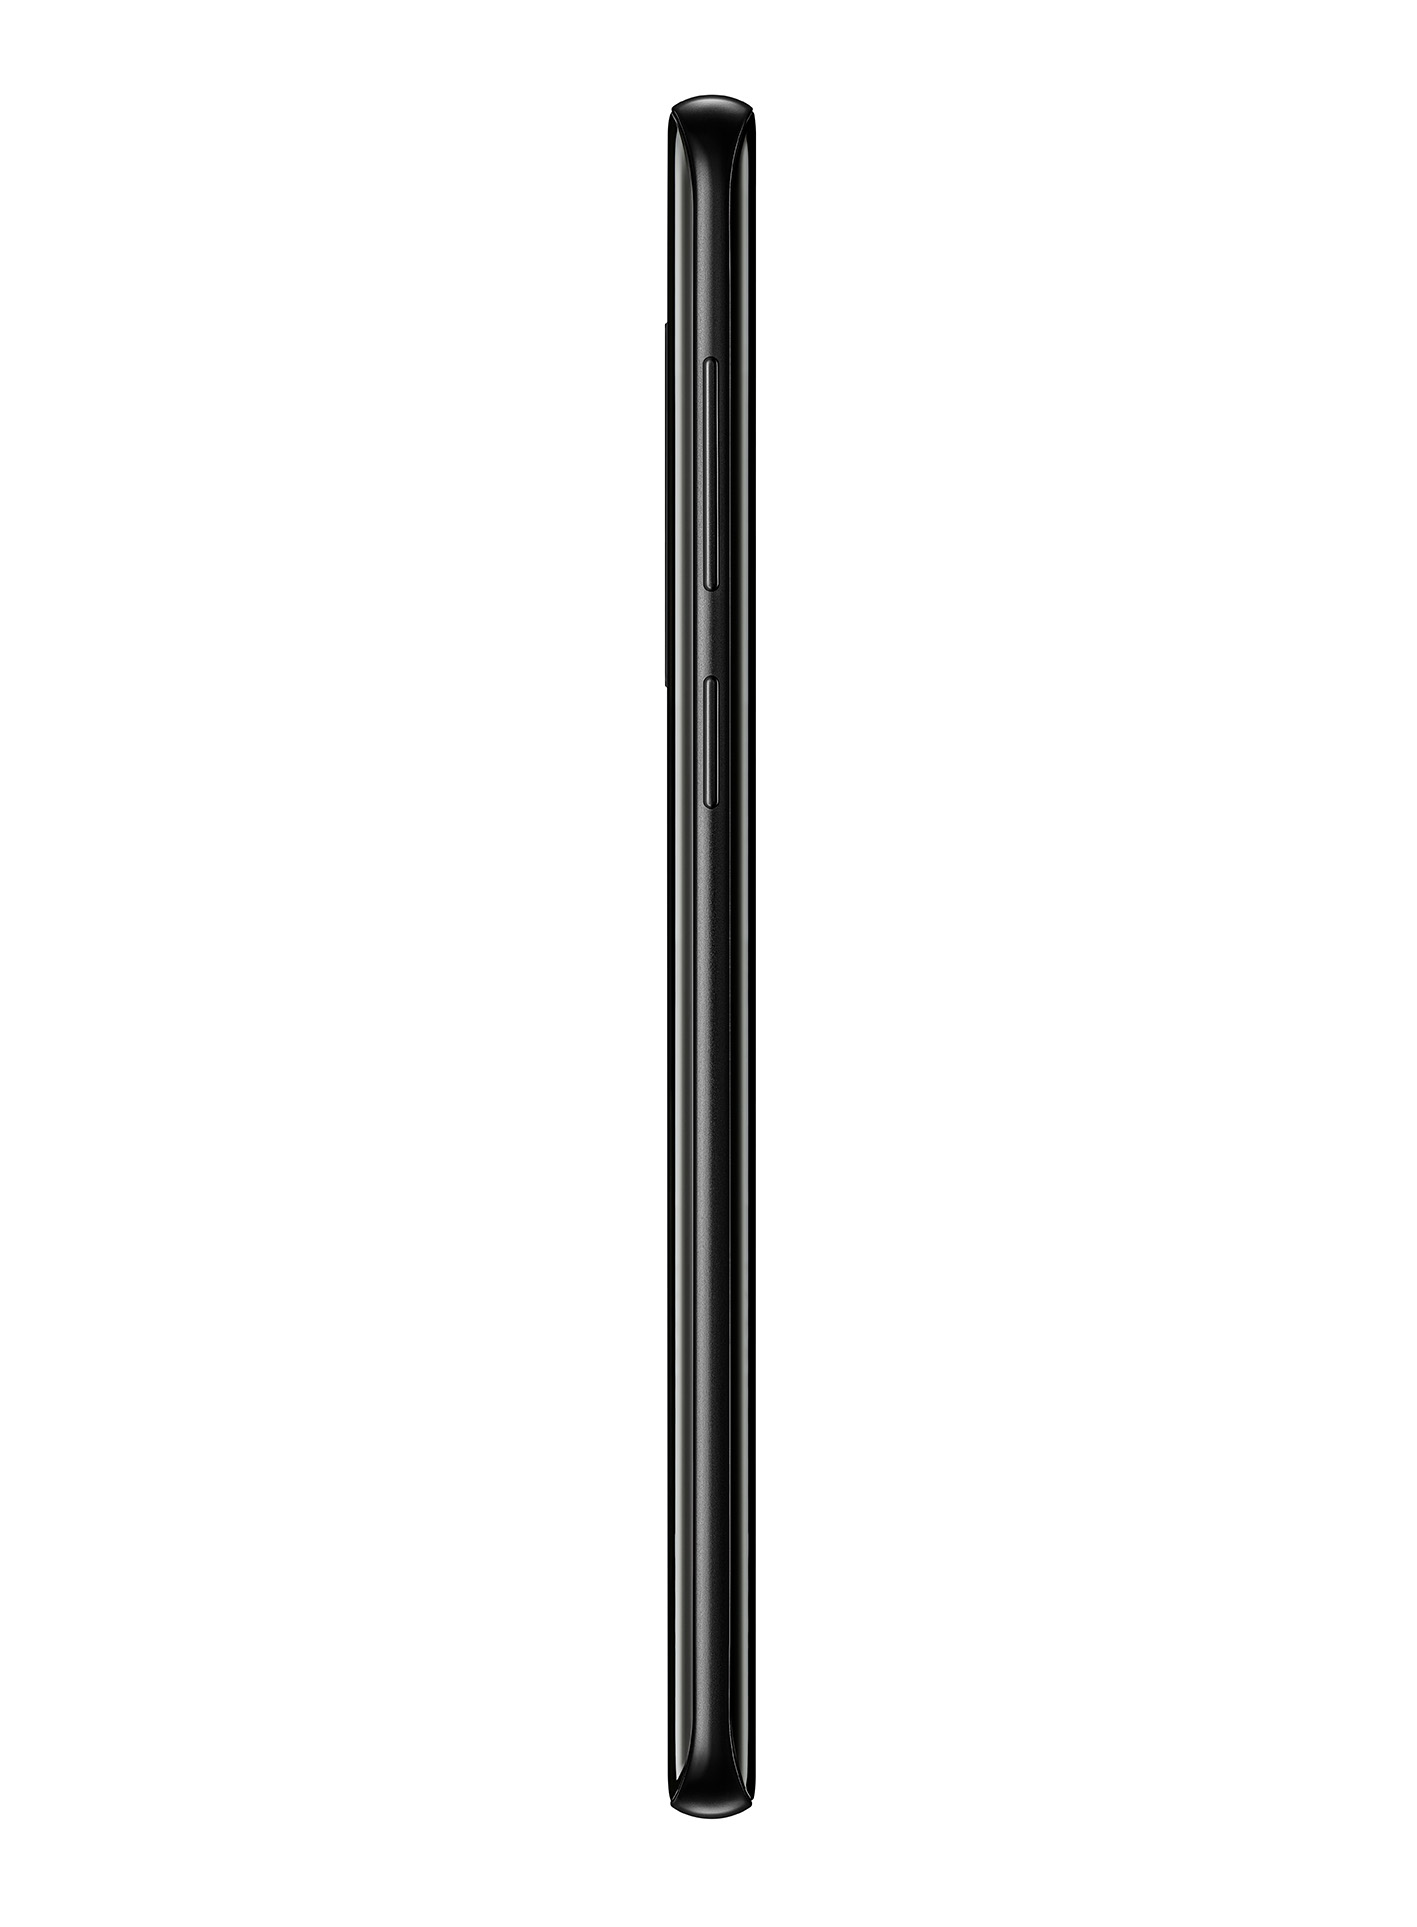 Straight Talk Samsung Galaxy S9+, 64GB, Black - Prepaid Smartphone - image 10 of 12